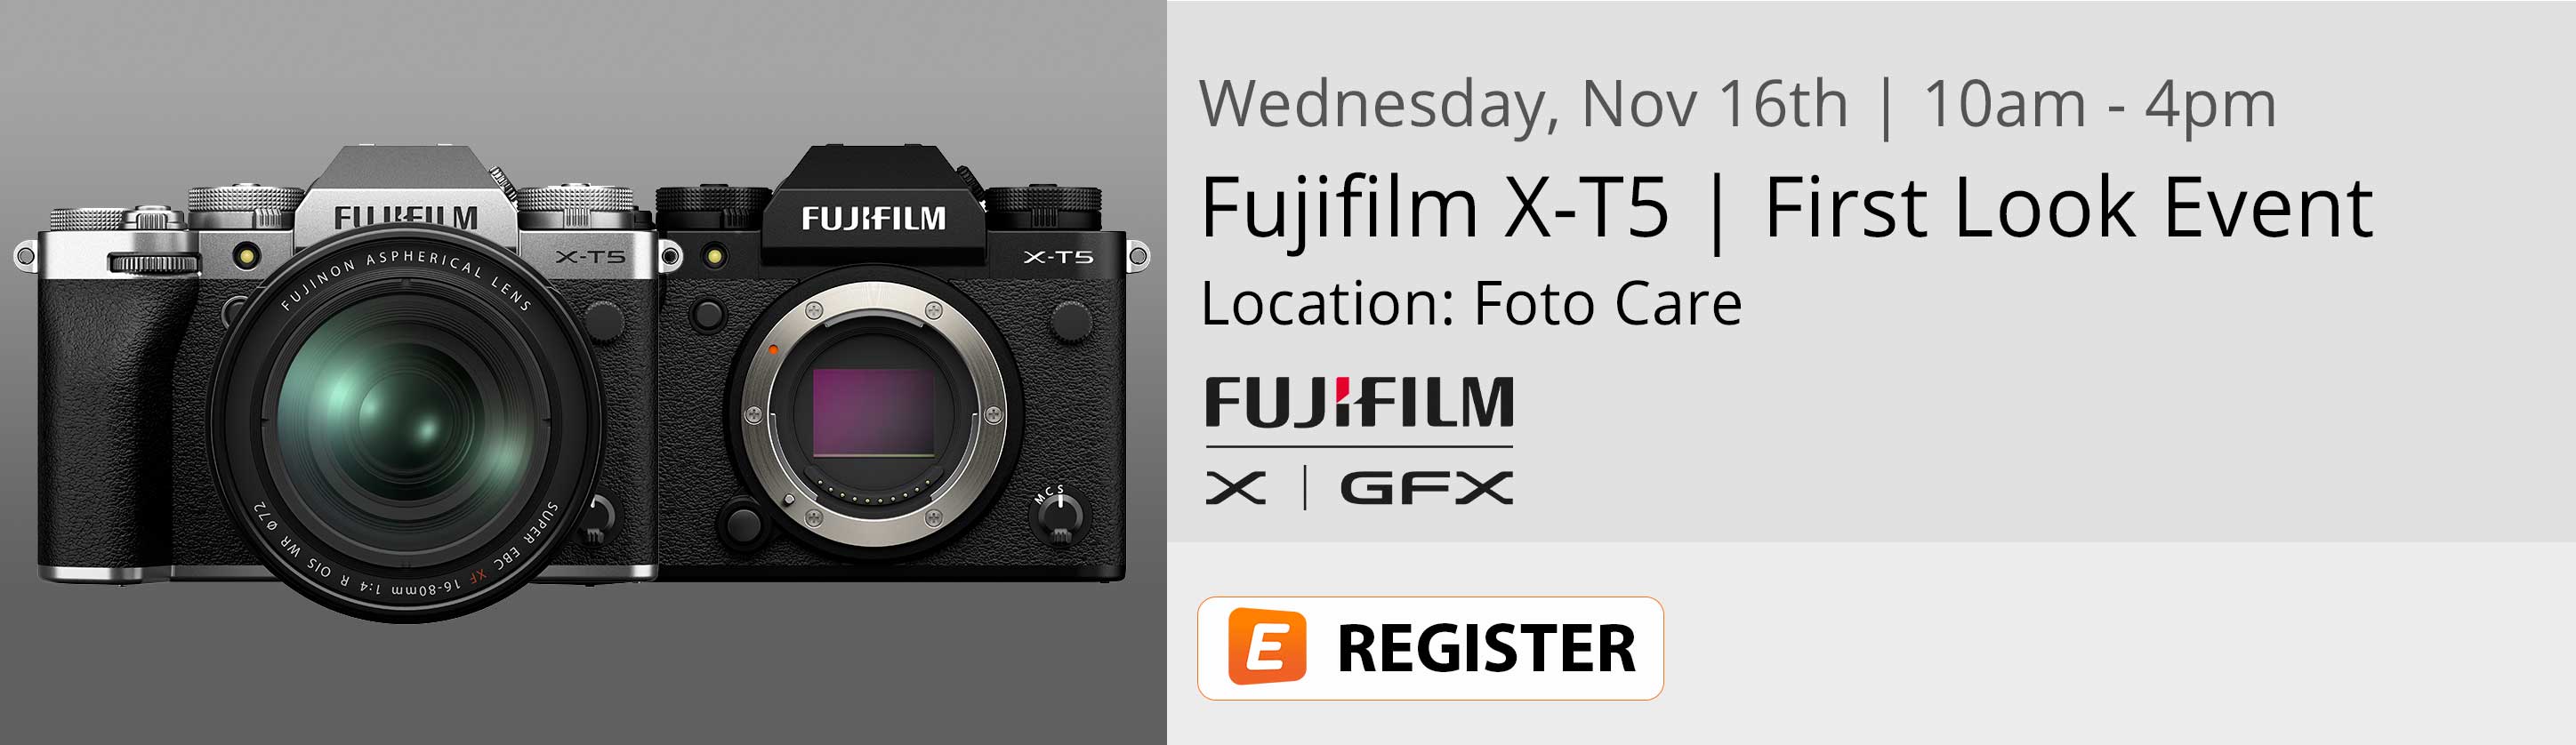 Fujifilm X-T5 First Look Event